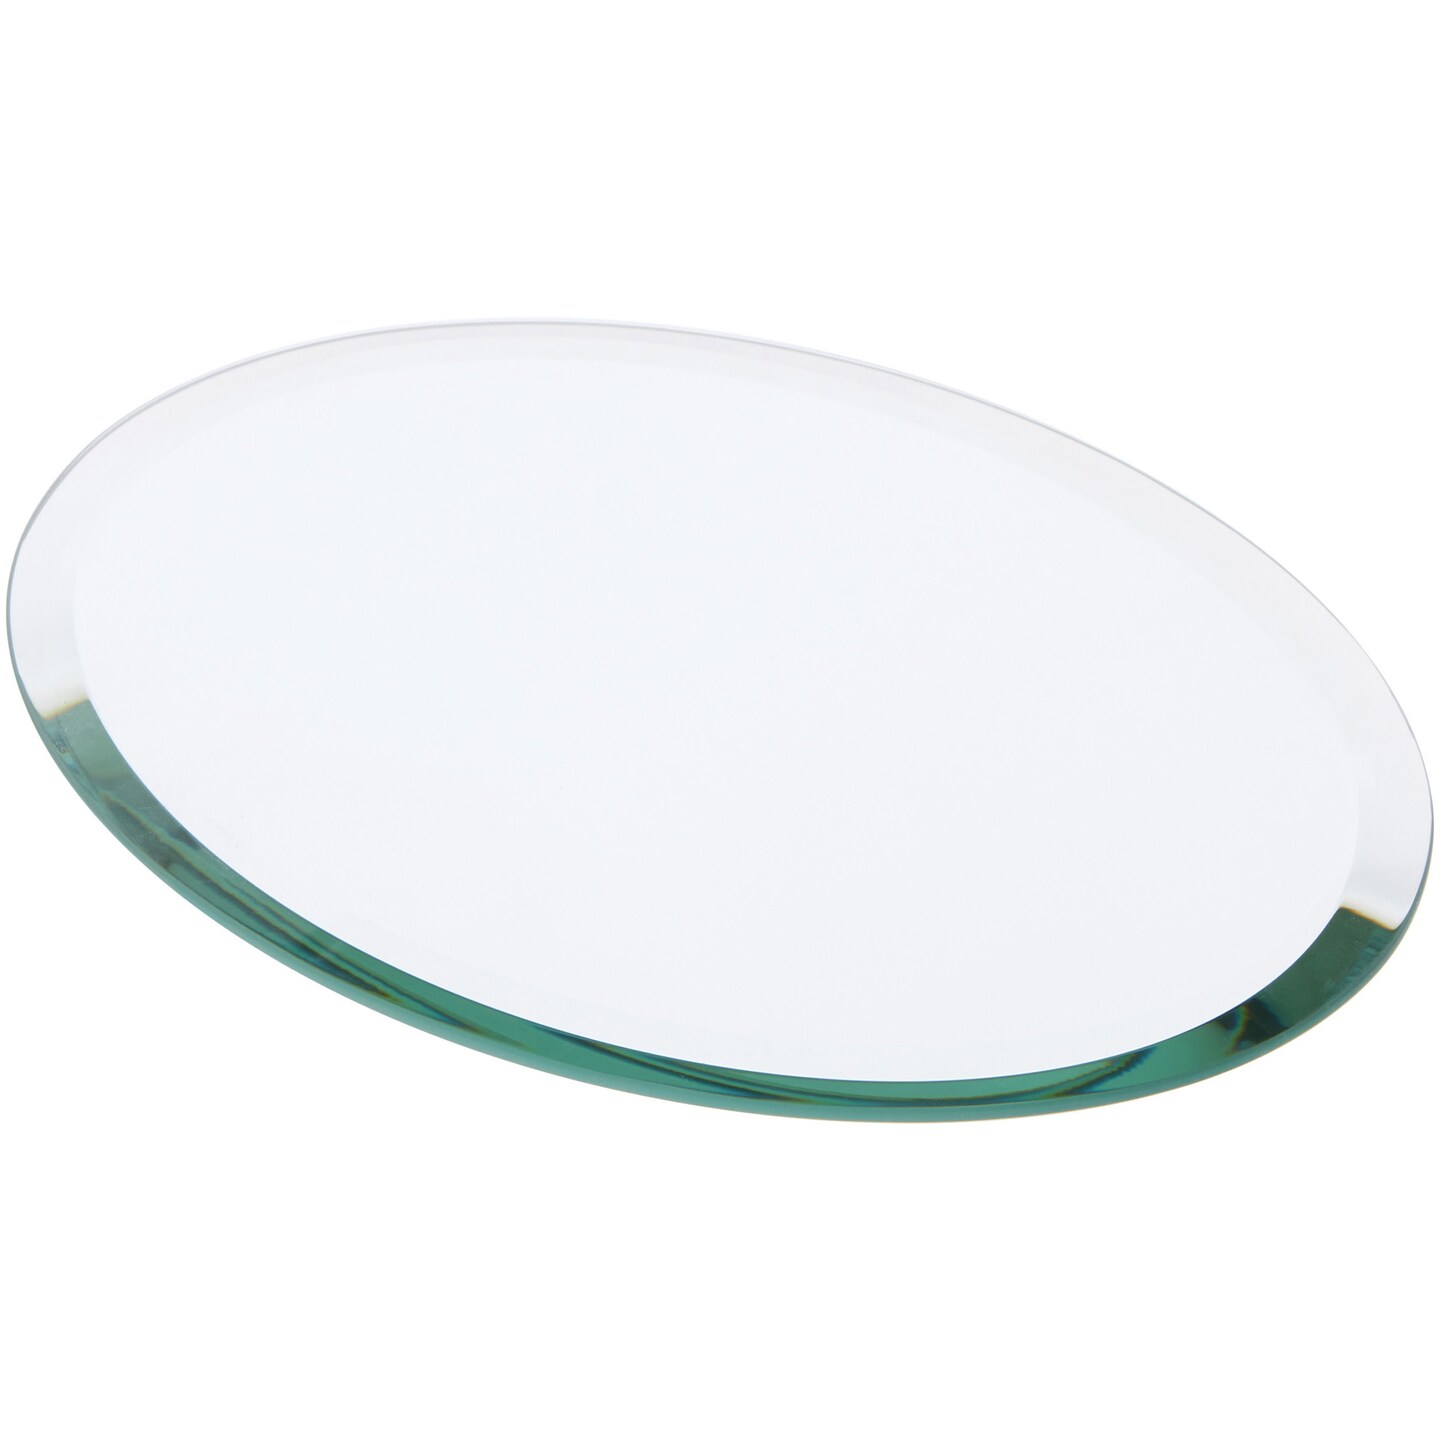 Plymor Oval 5mm Beveled Glass Mirror, 7 inch x 9 inch